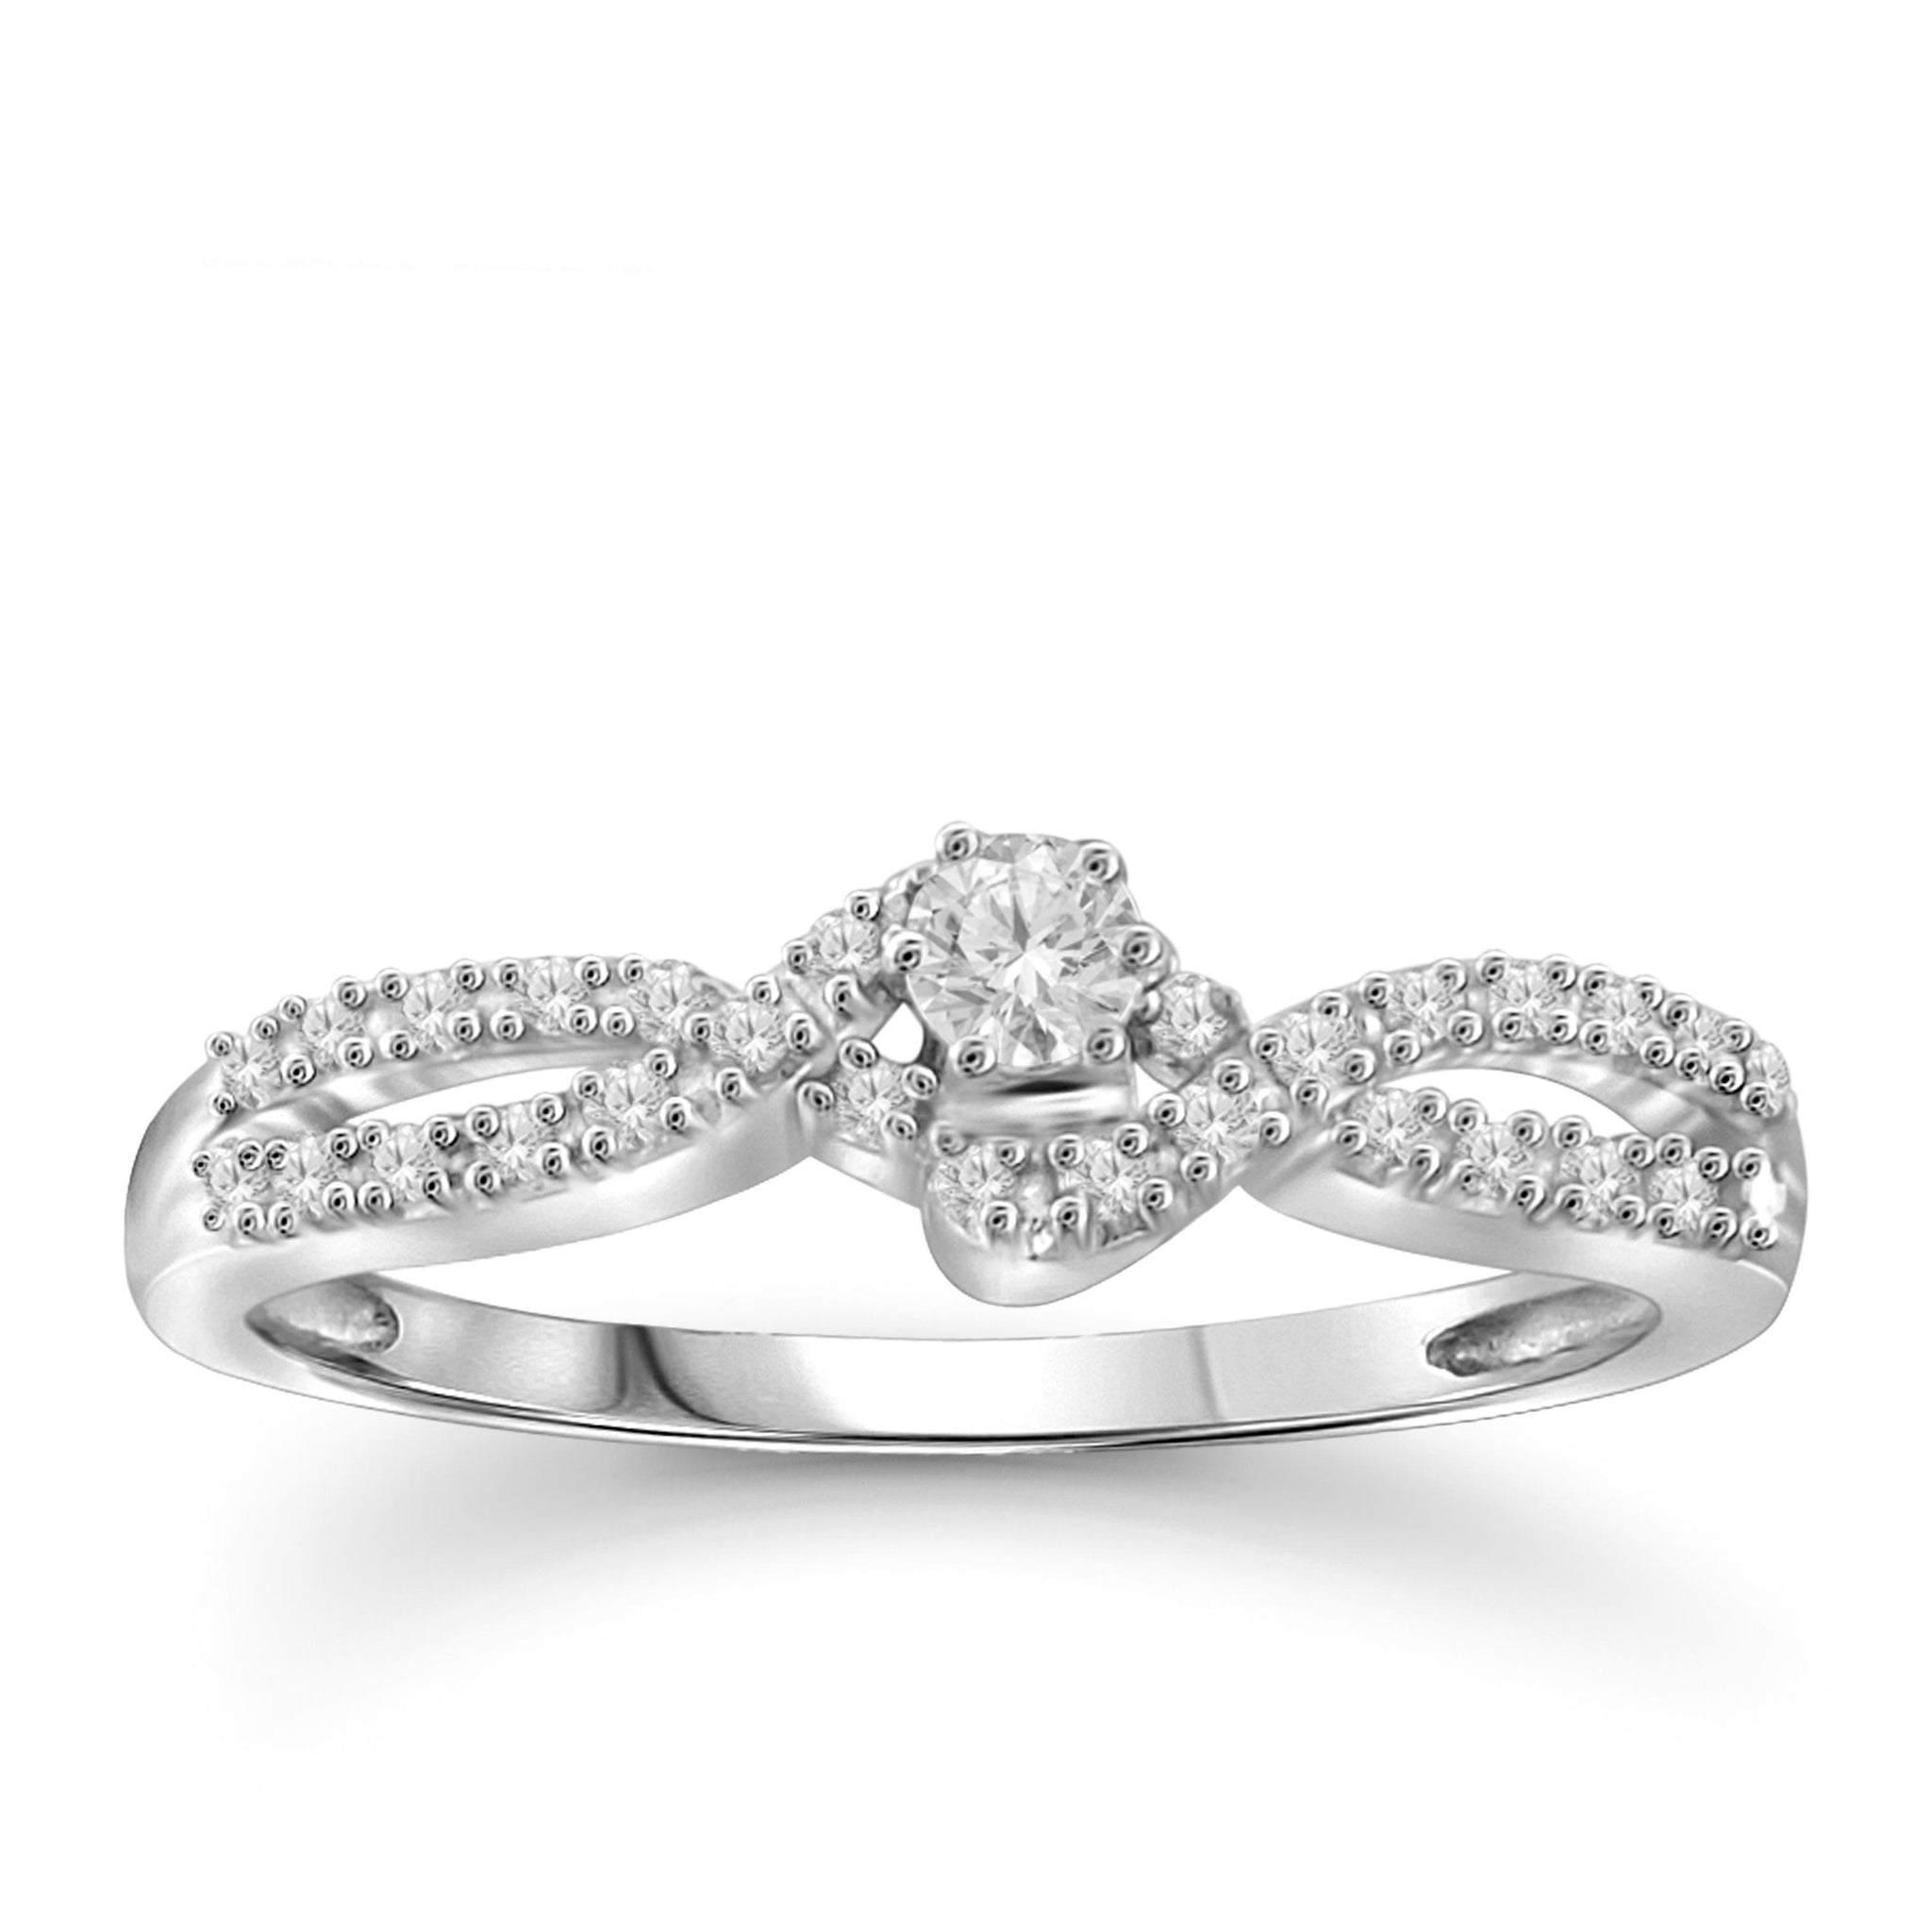 Jewelnova 1/4 Carat T.W. White Diamond 10K Gold Engagement Ring - Assorted Colors